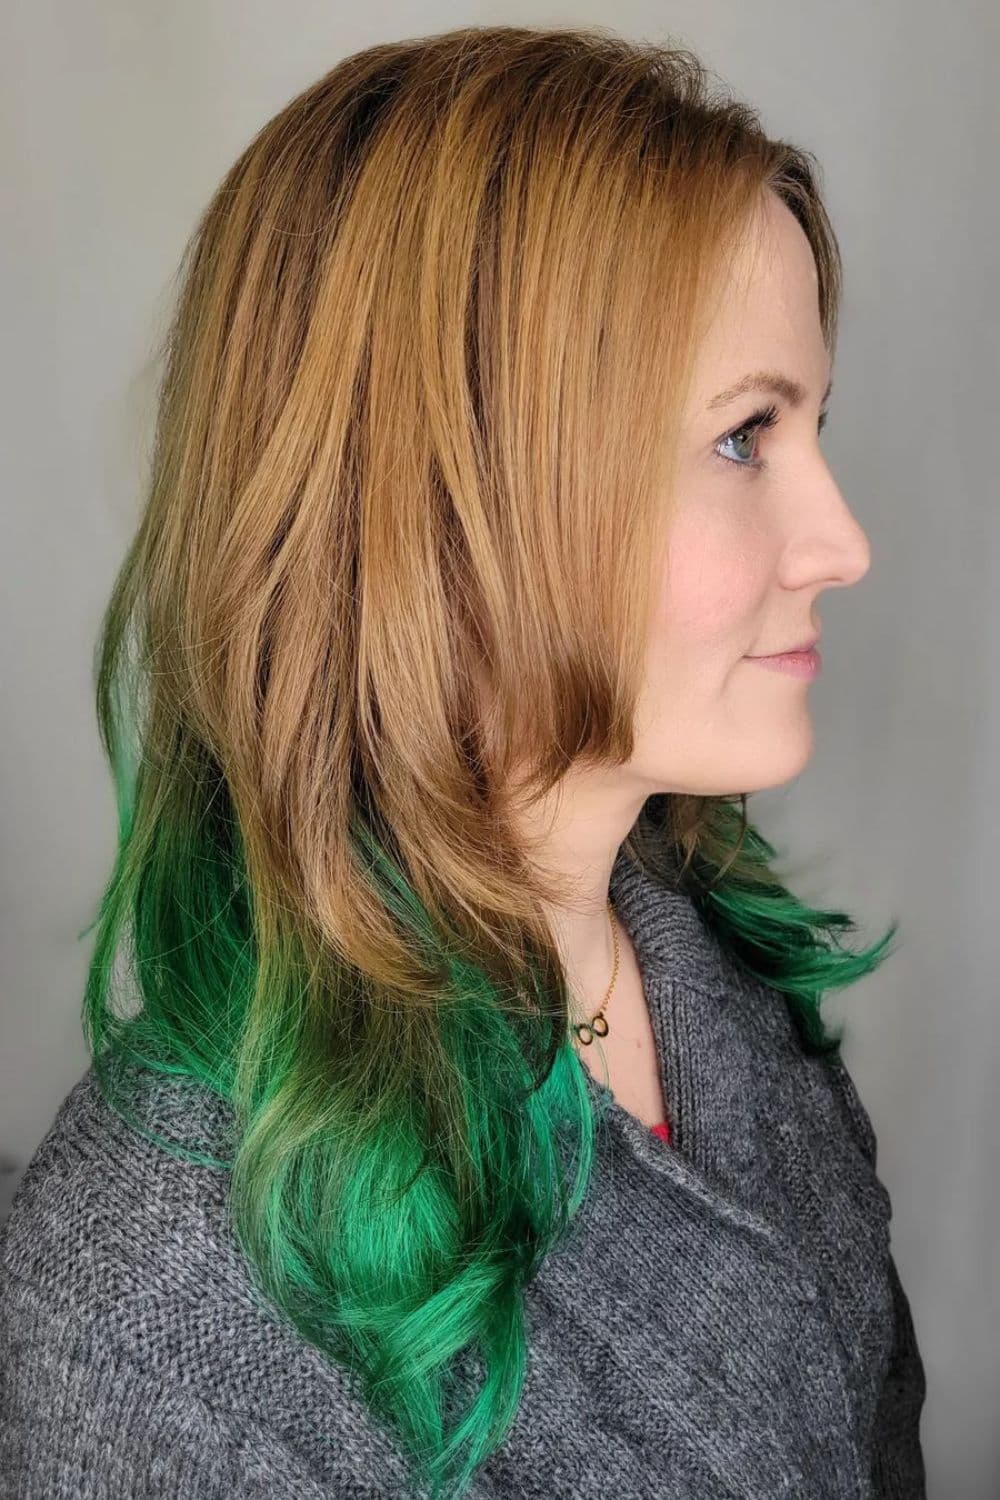 A woman with a medium-length green ombre hair.